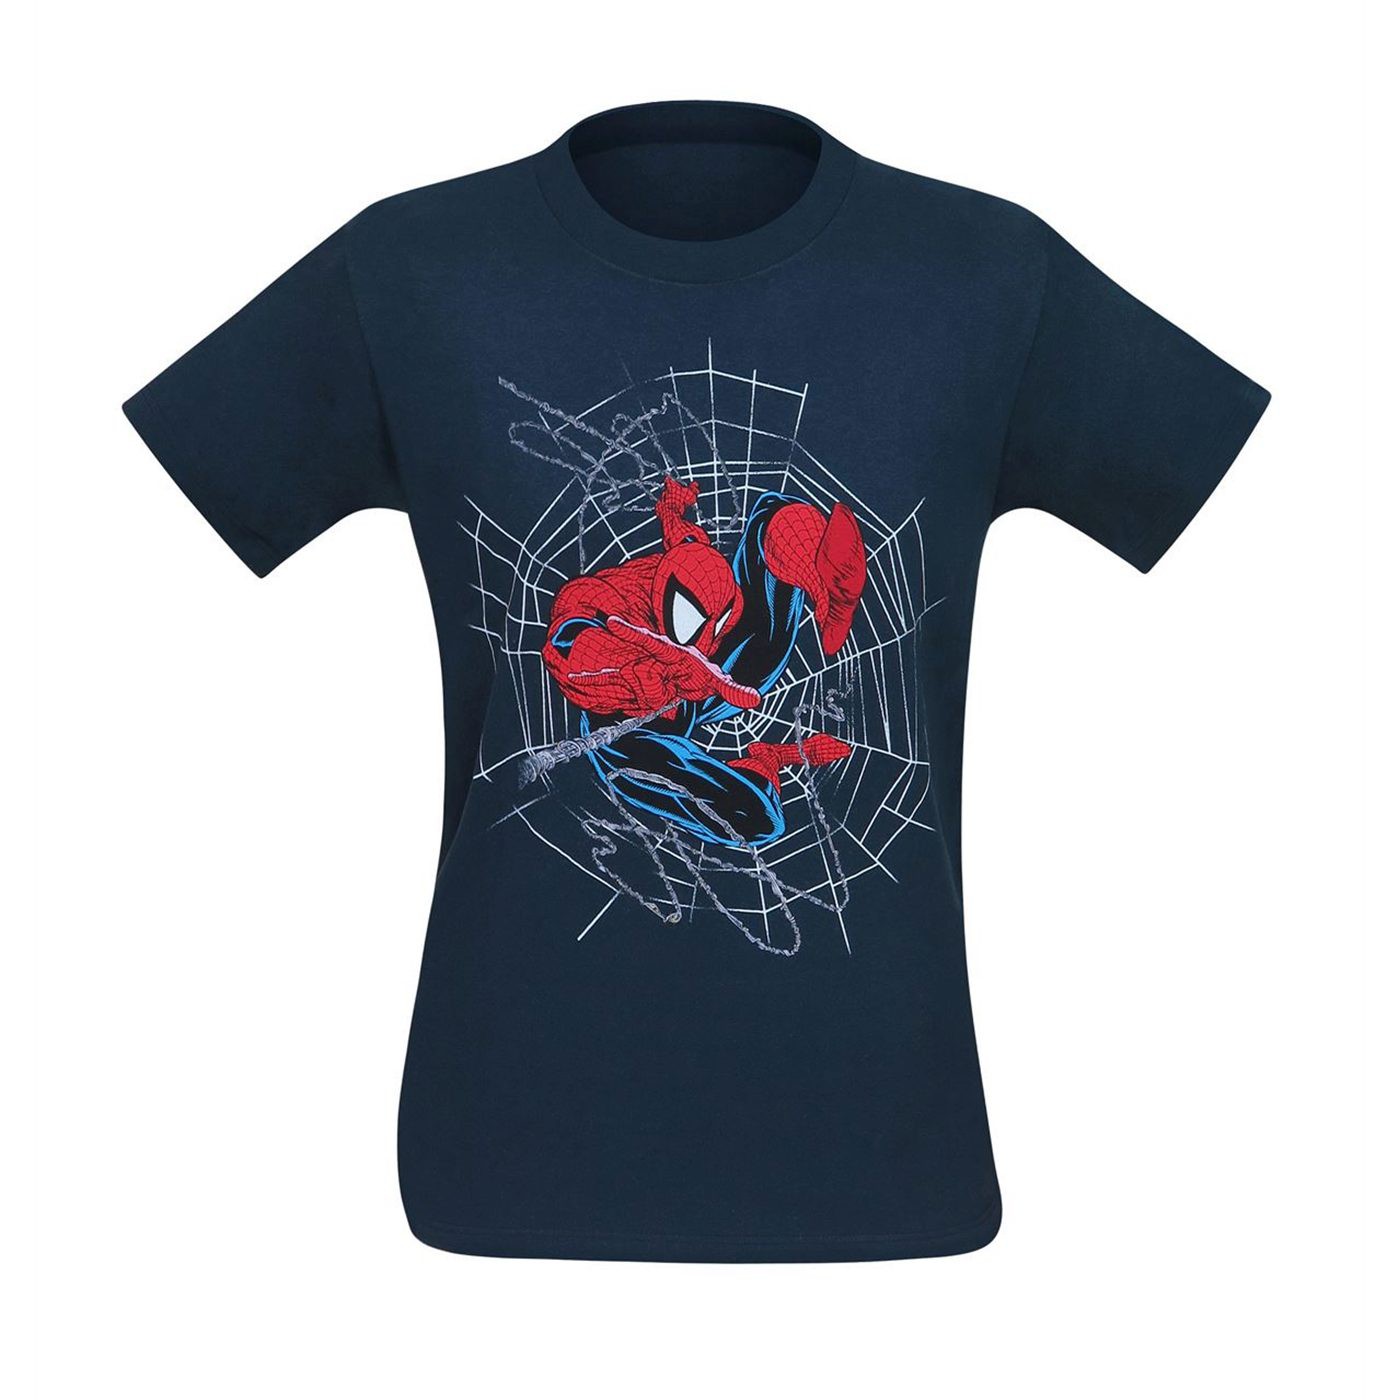 Spiderman Webbed Image and Bio Men's T-Shirt